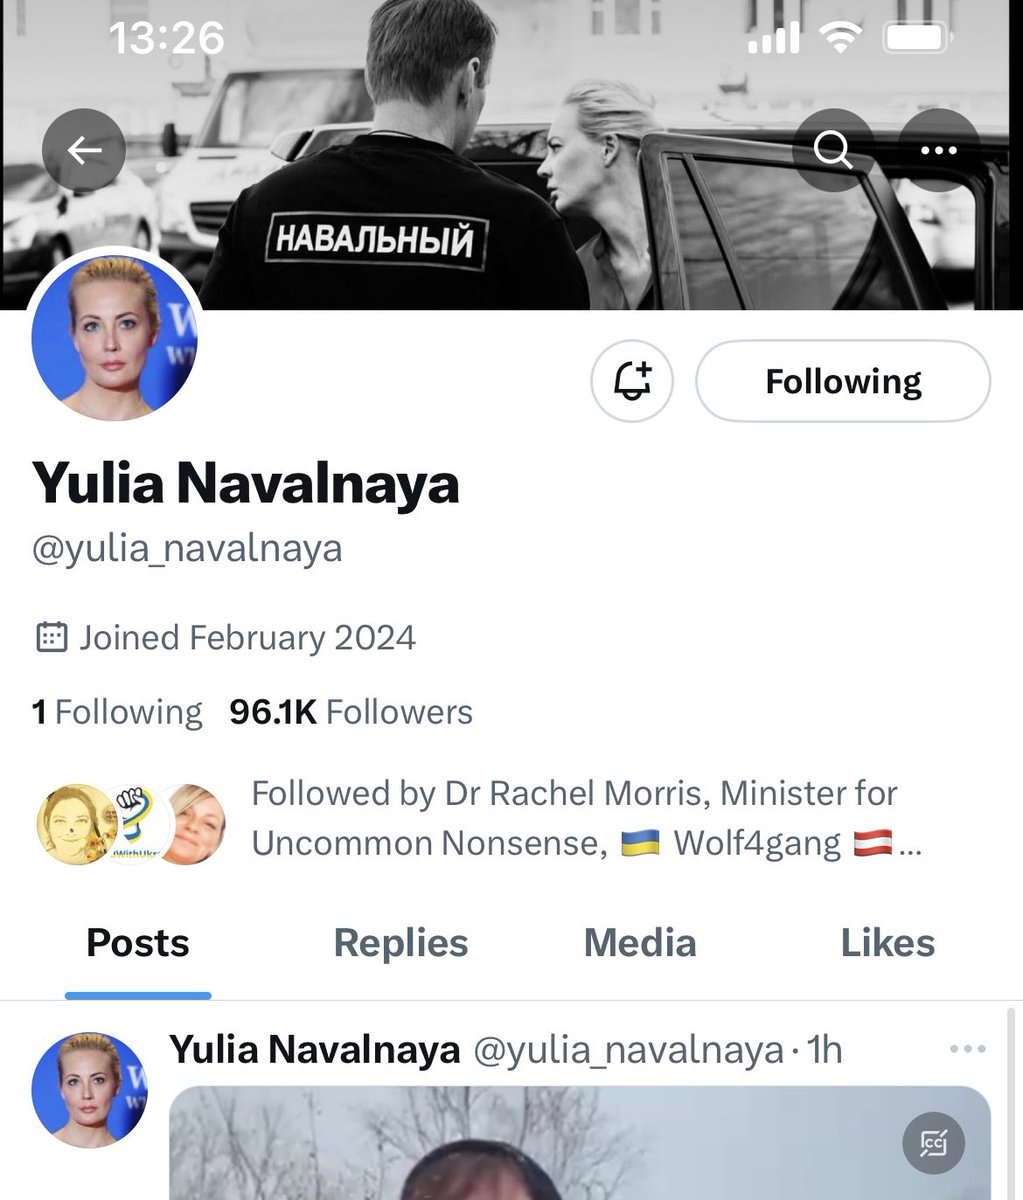 The account of Yulia Navalnaya (@yulia_navalnaya) is back up!! Everyone follow her. ❤️🇷🇺